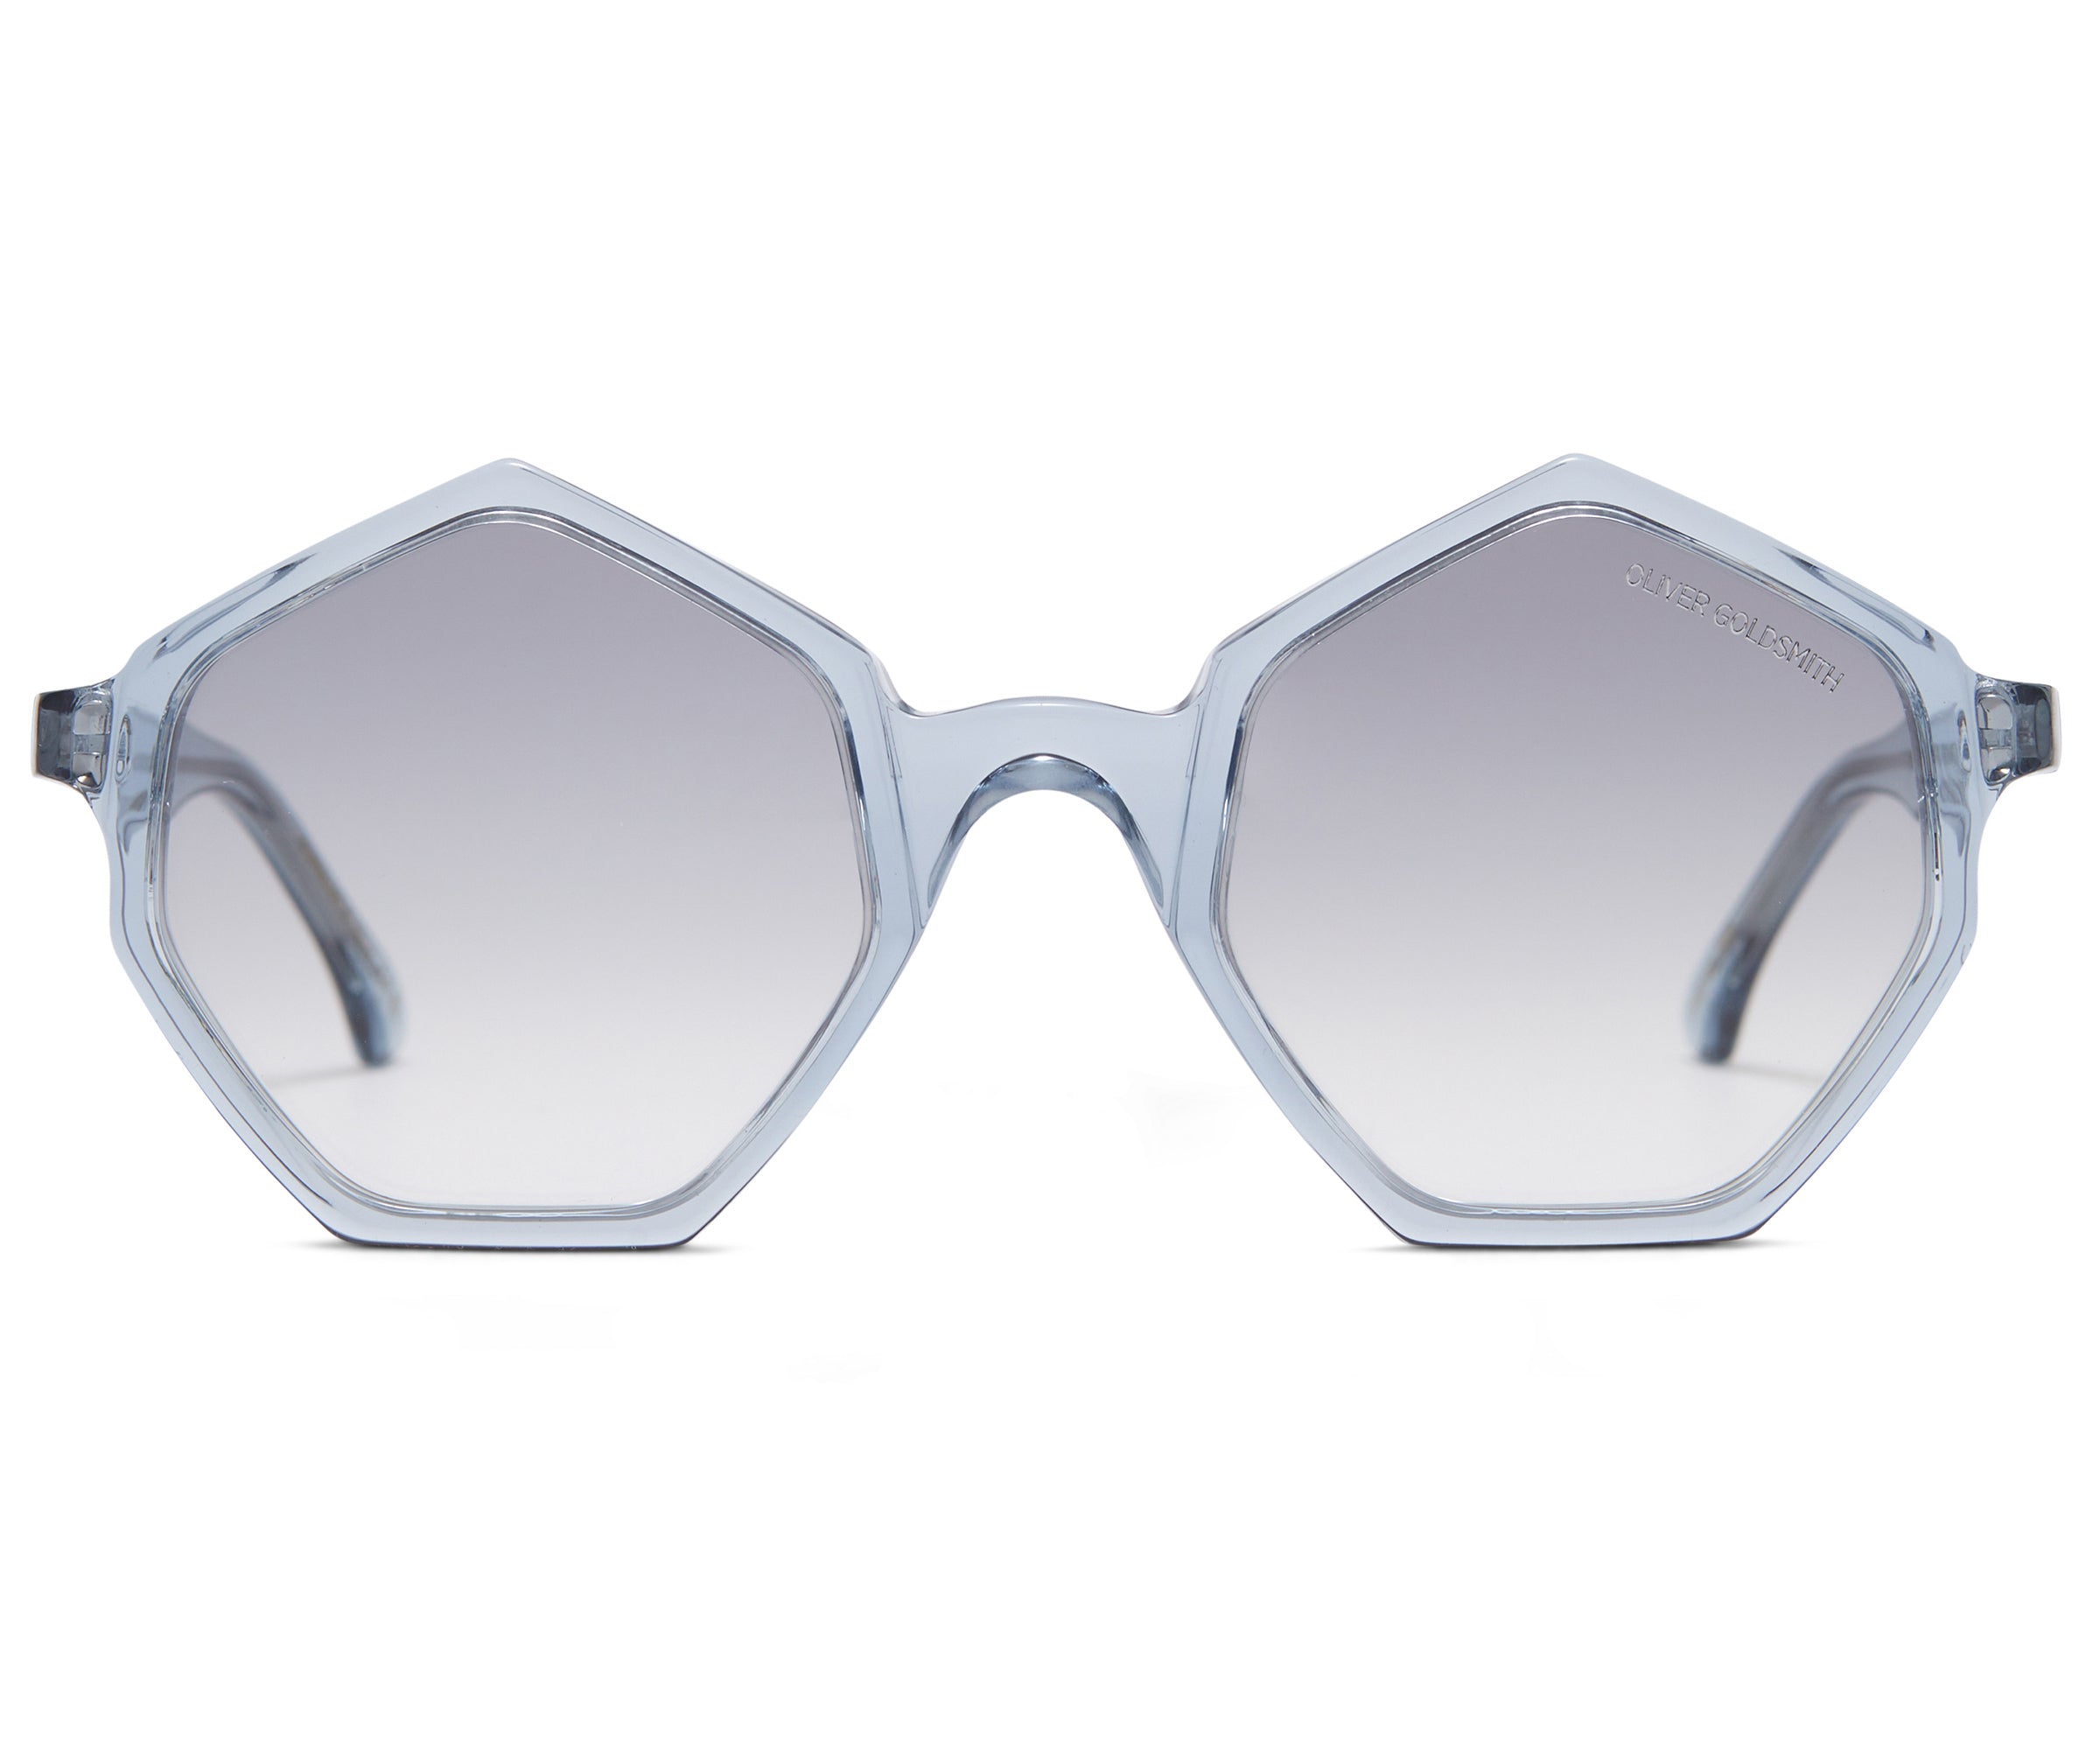 Light Blue Hexagon Sunglasses with light Lens Tint